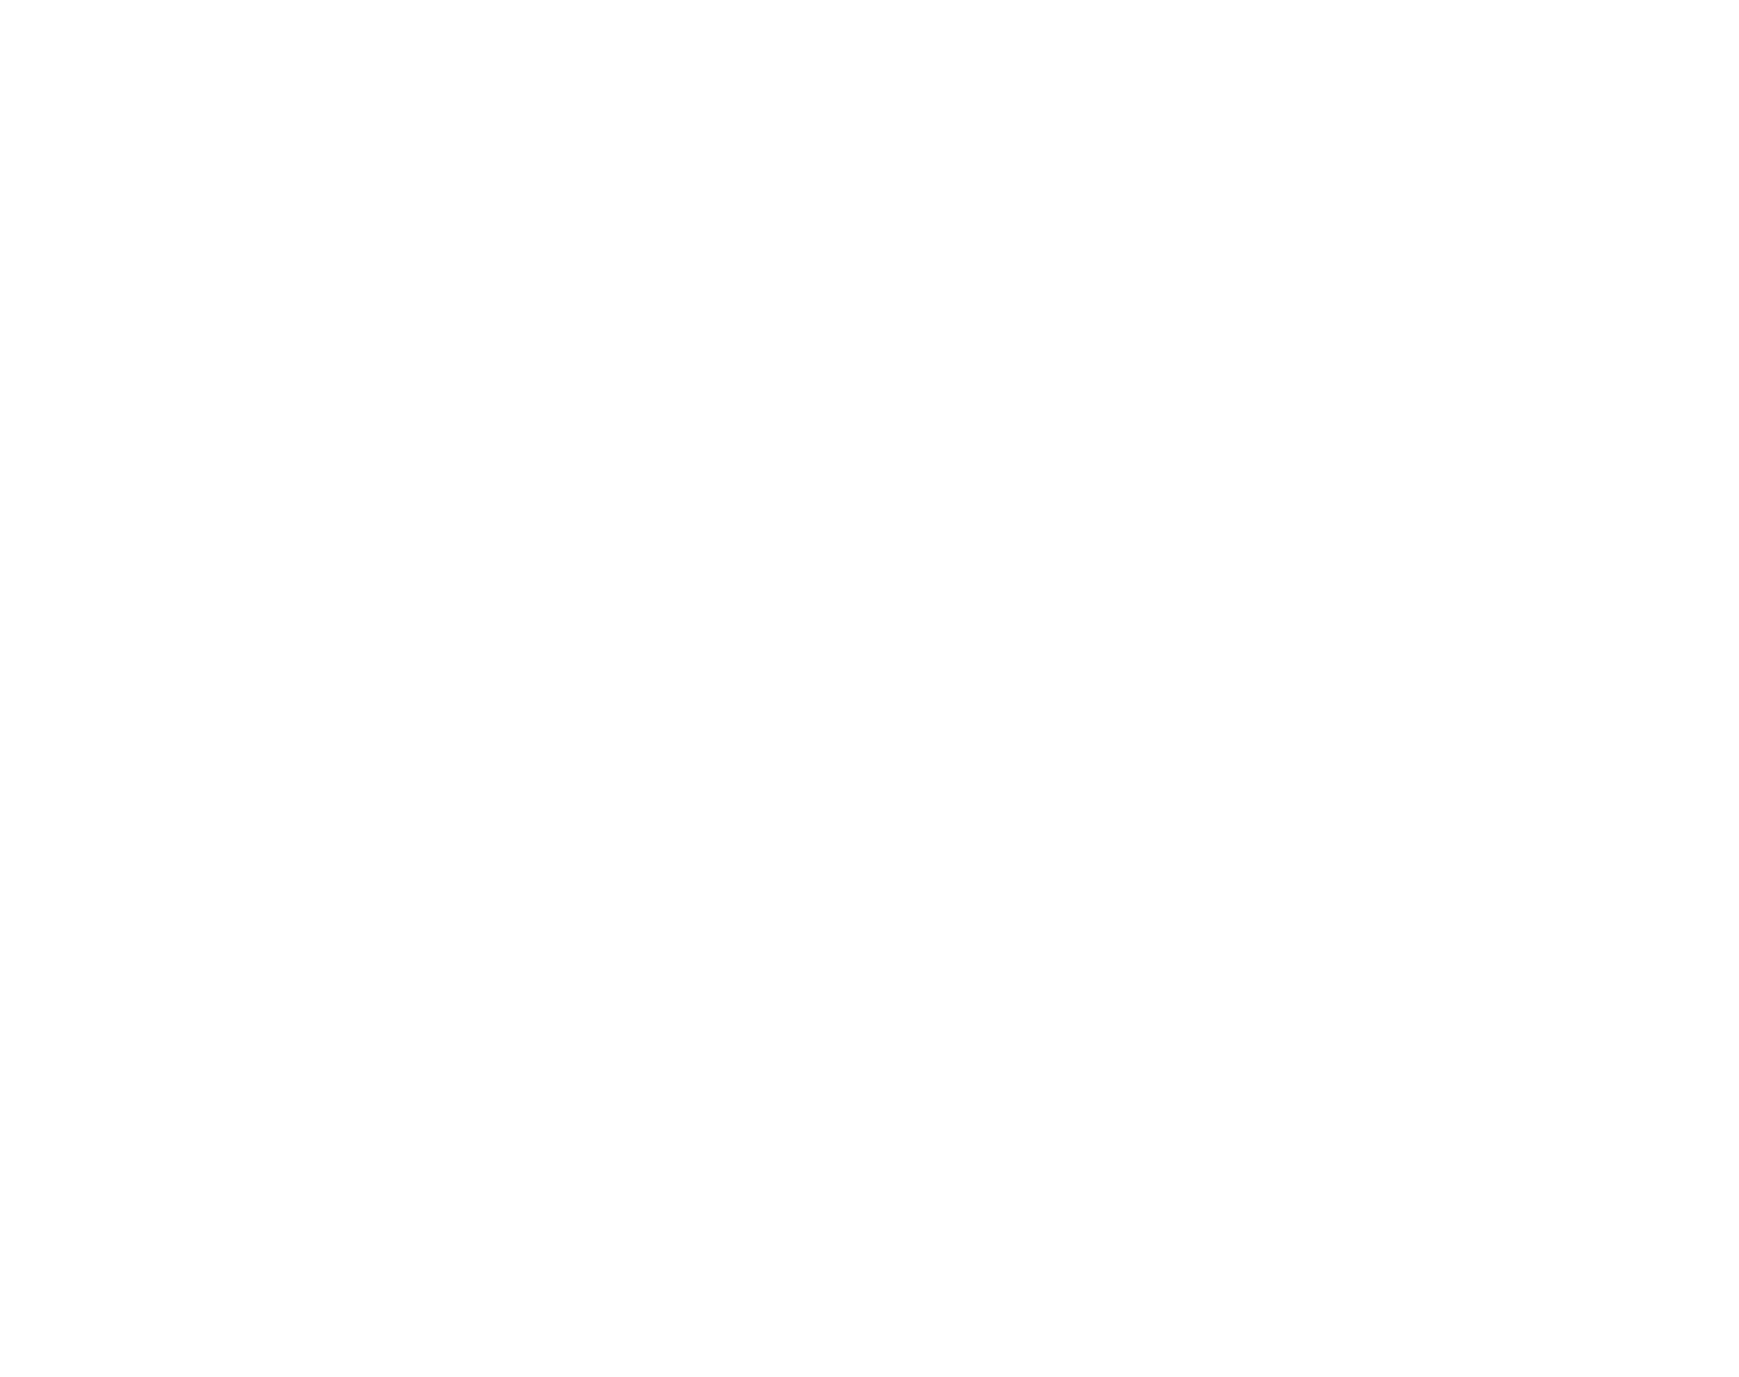 CAP Assets